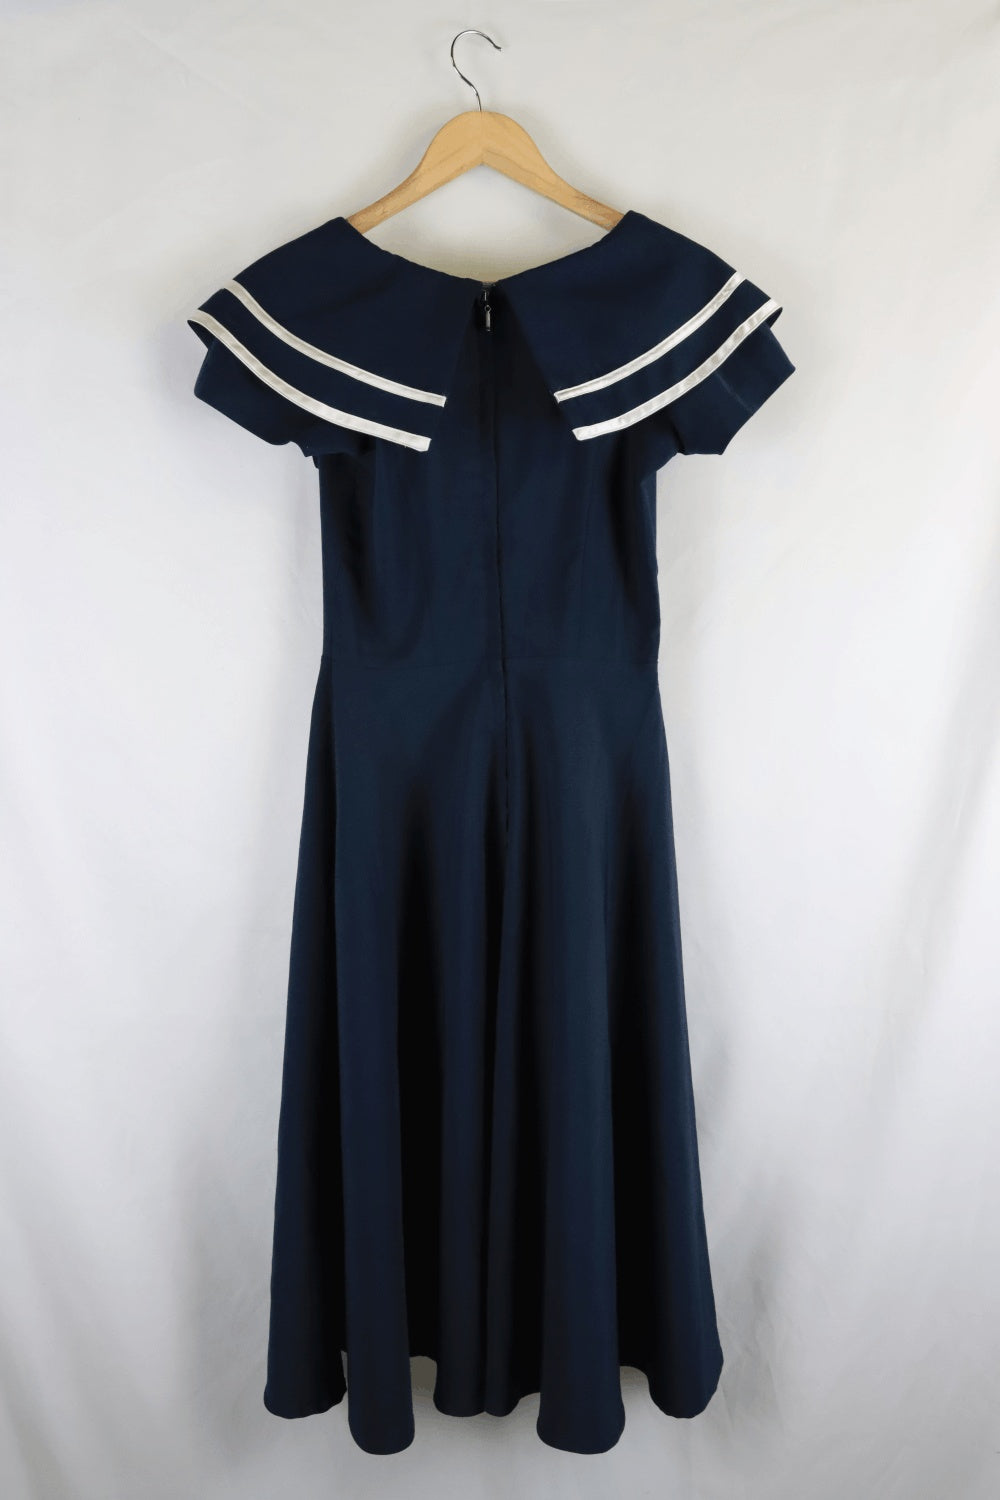 Bettie Page Navy Dress M